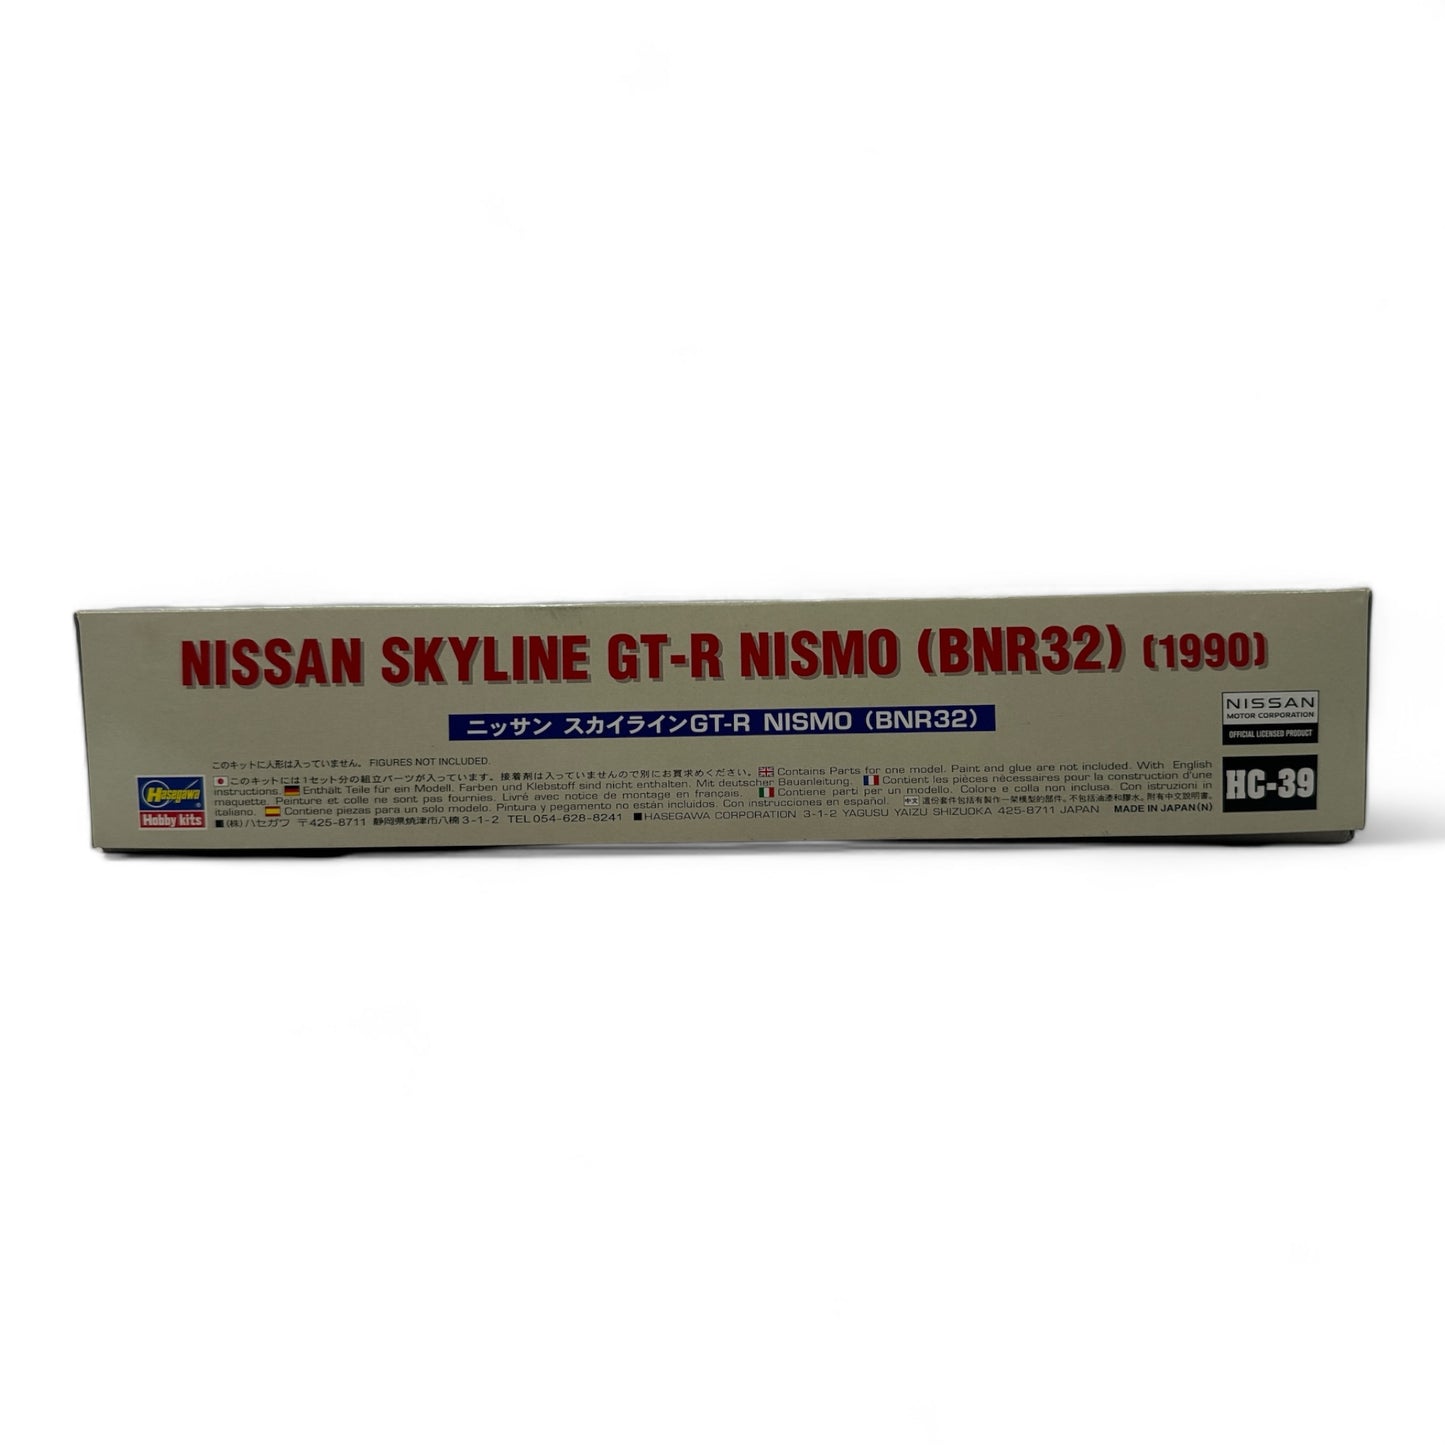 Nissan Skyline GT-R NISMO (BNR32) (1990) 1:24